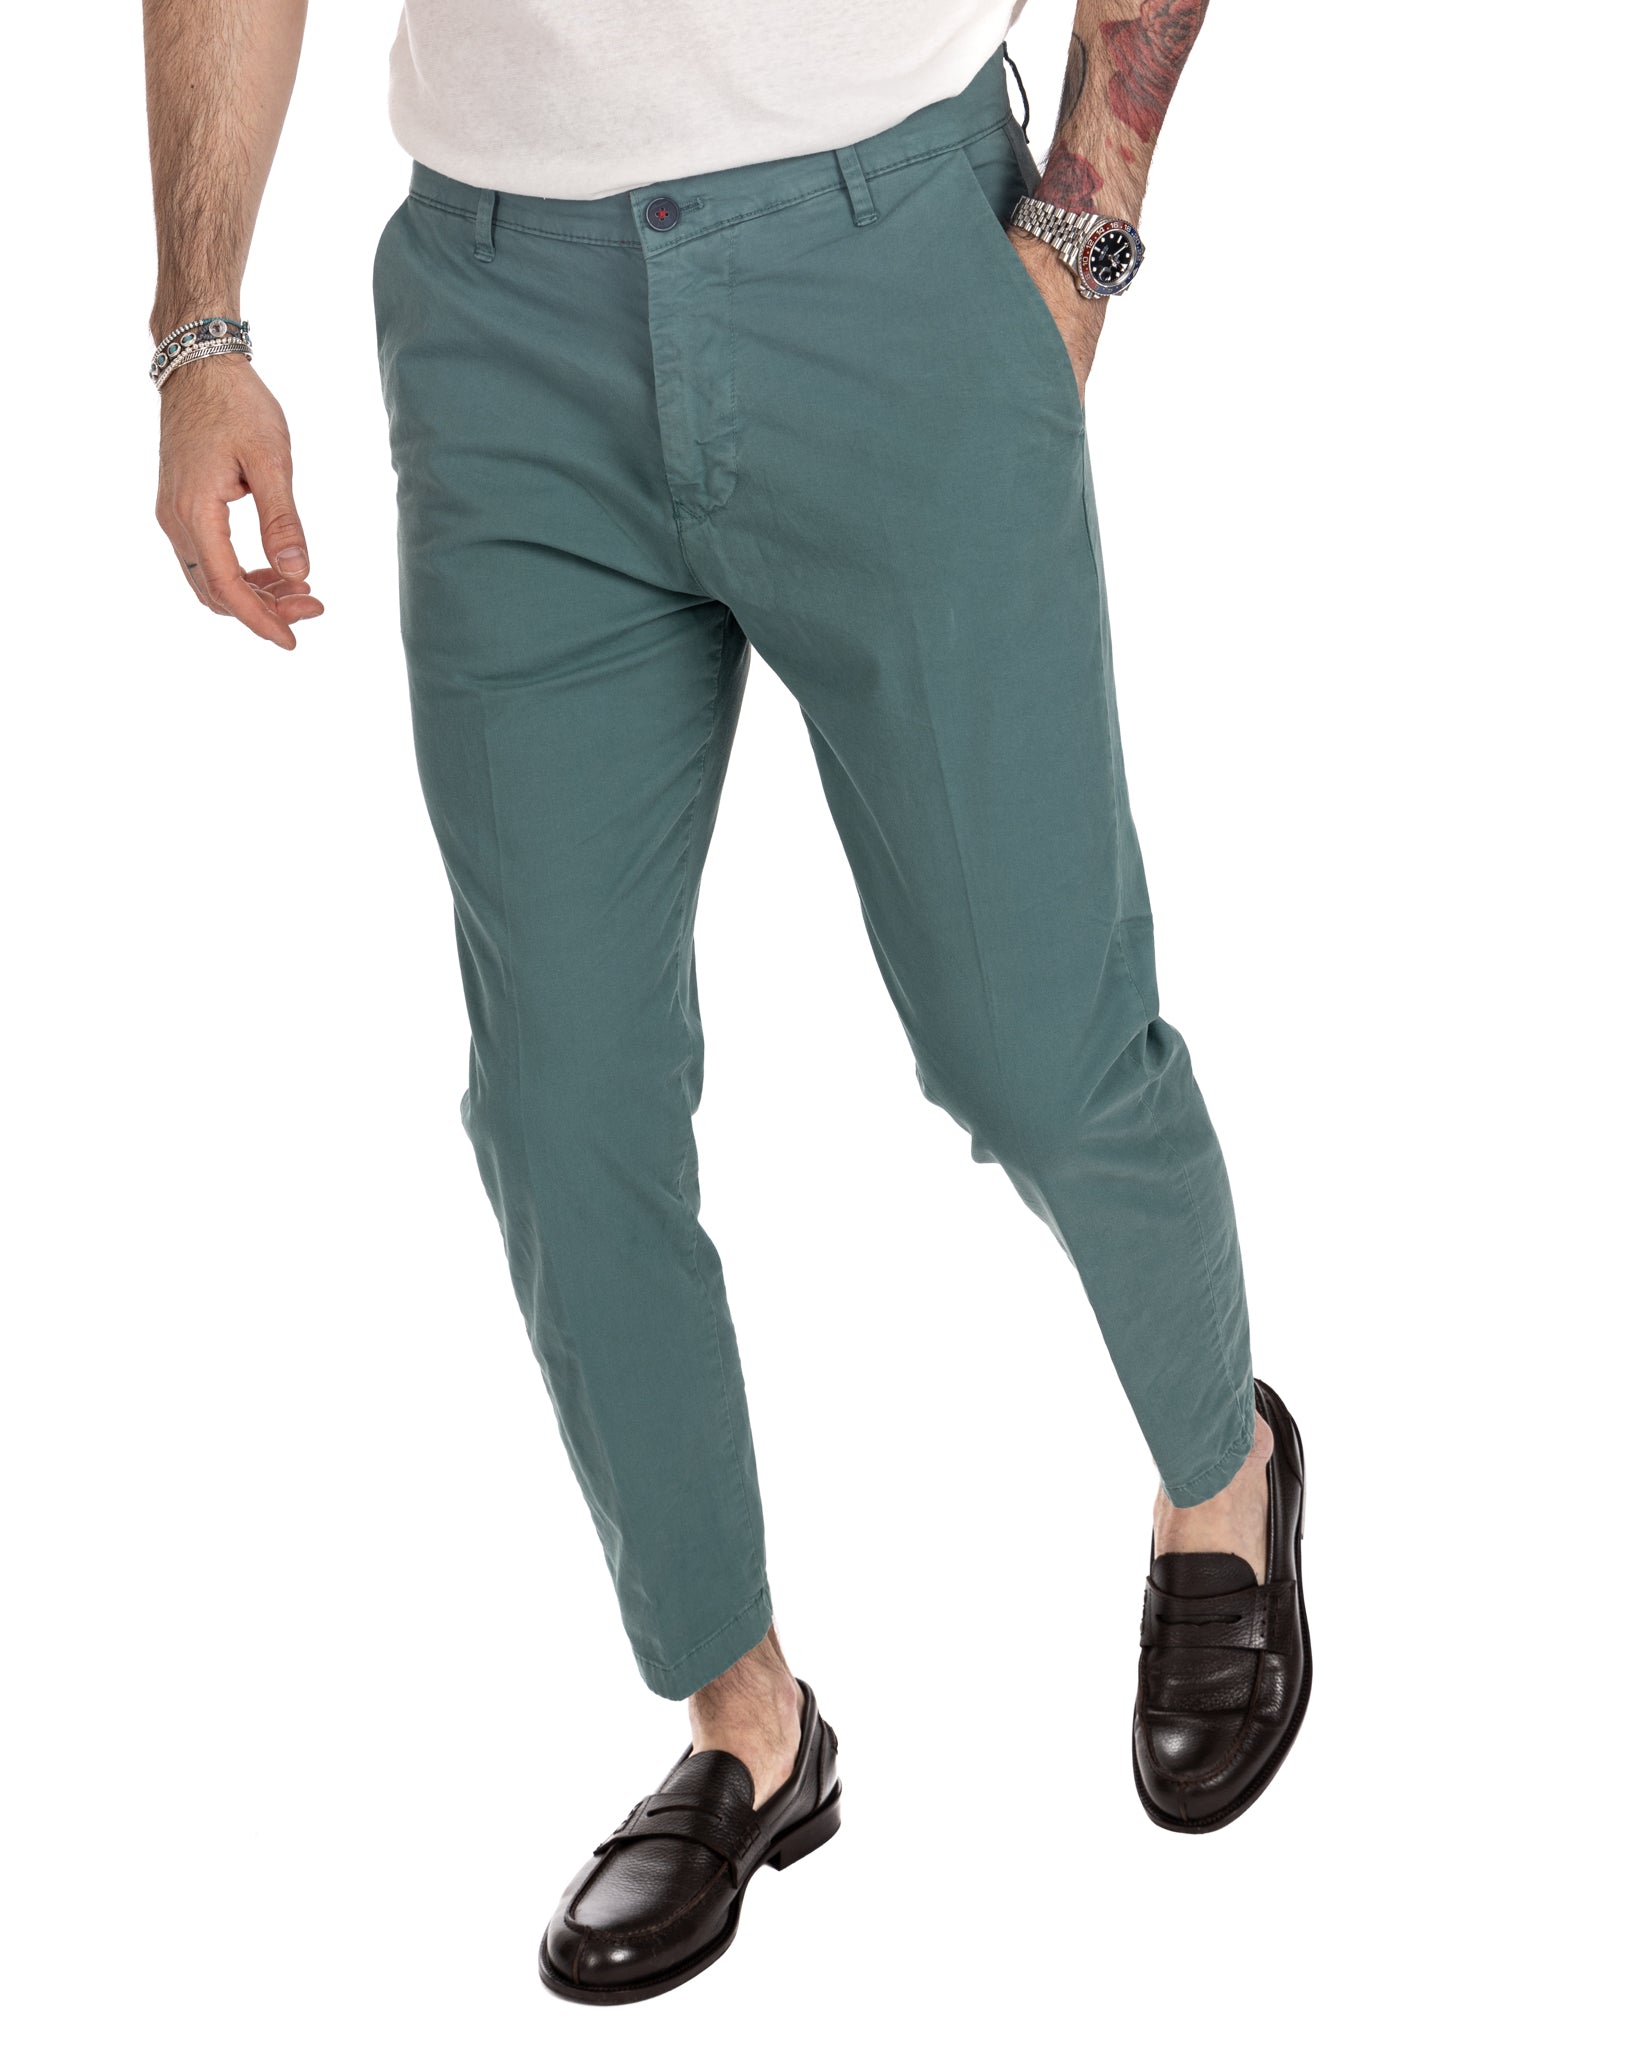 Lauren - green capri trousers